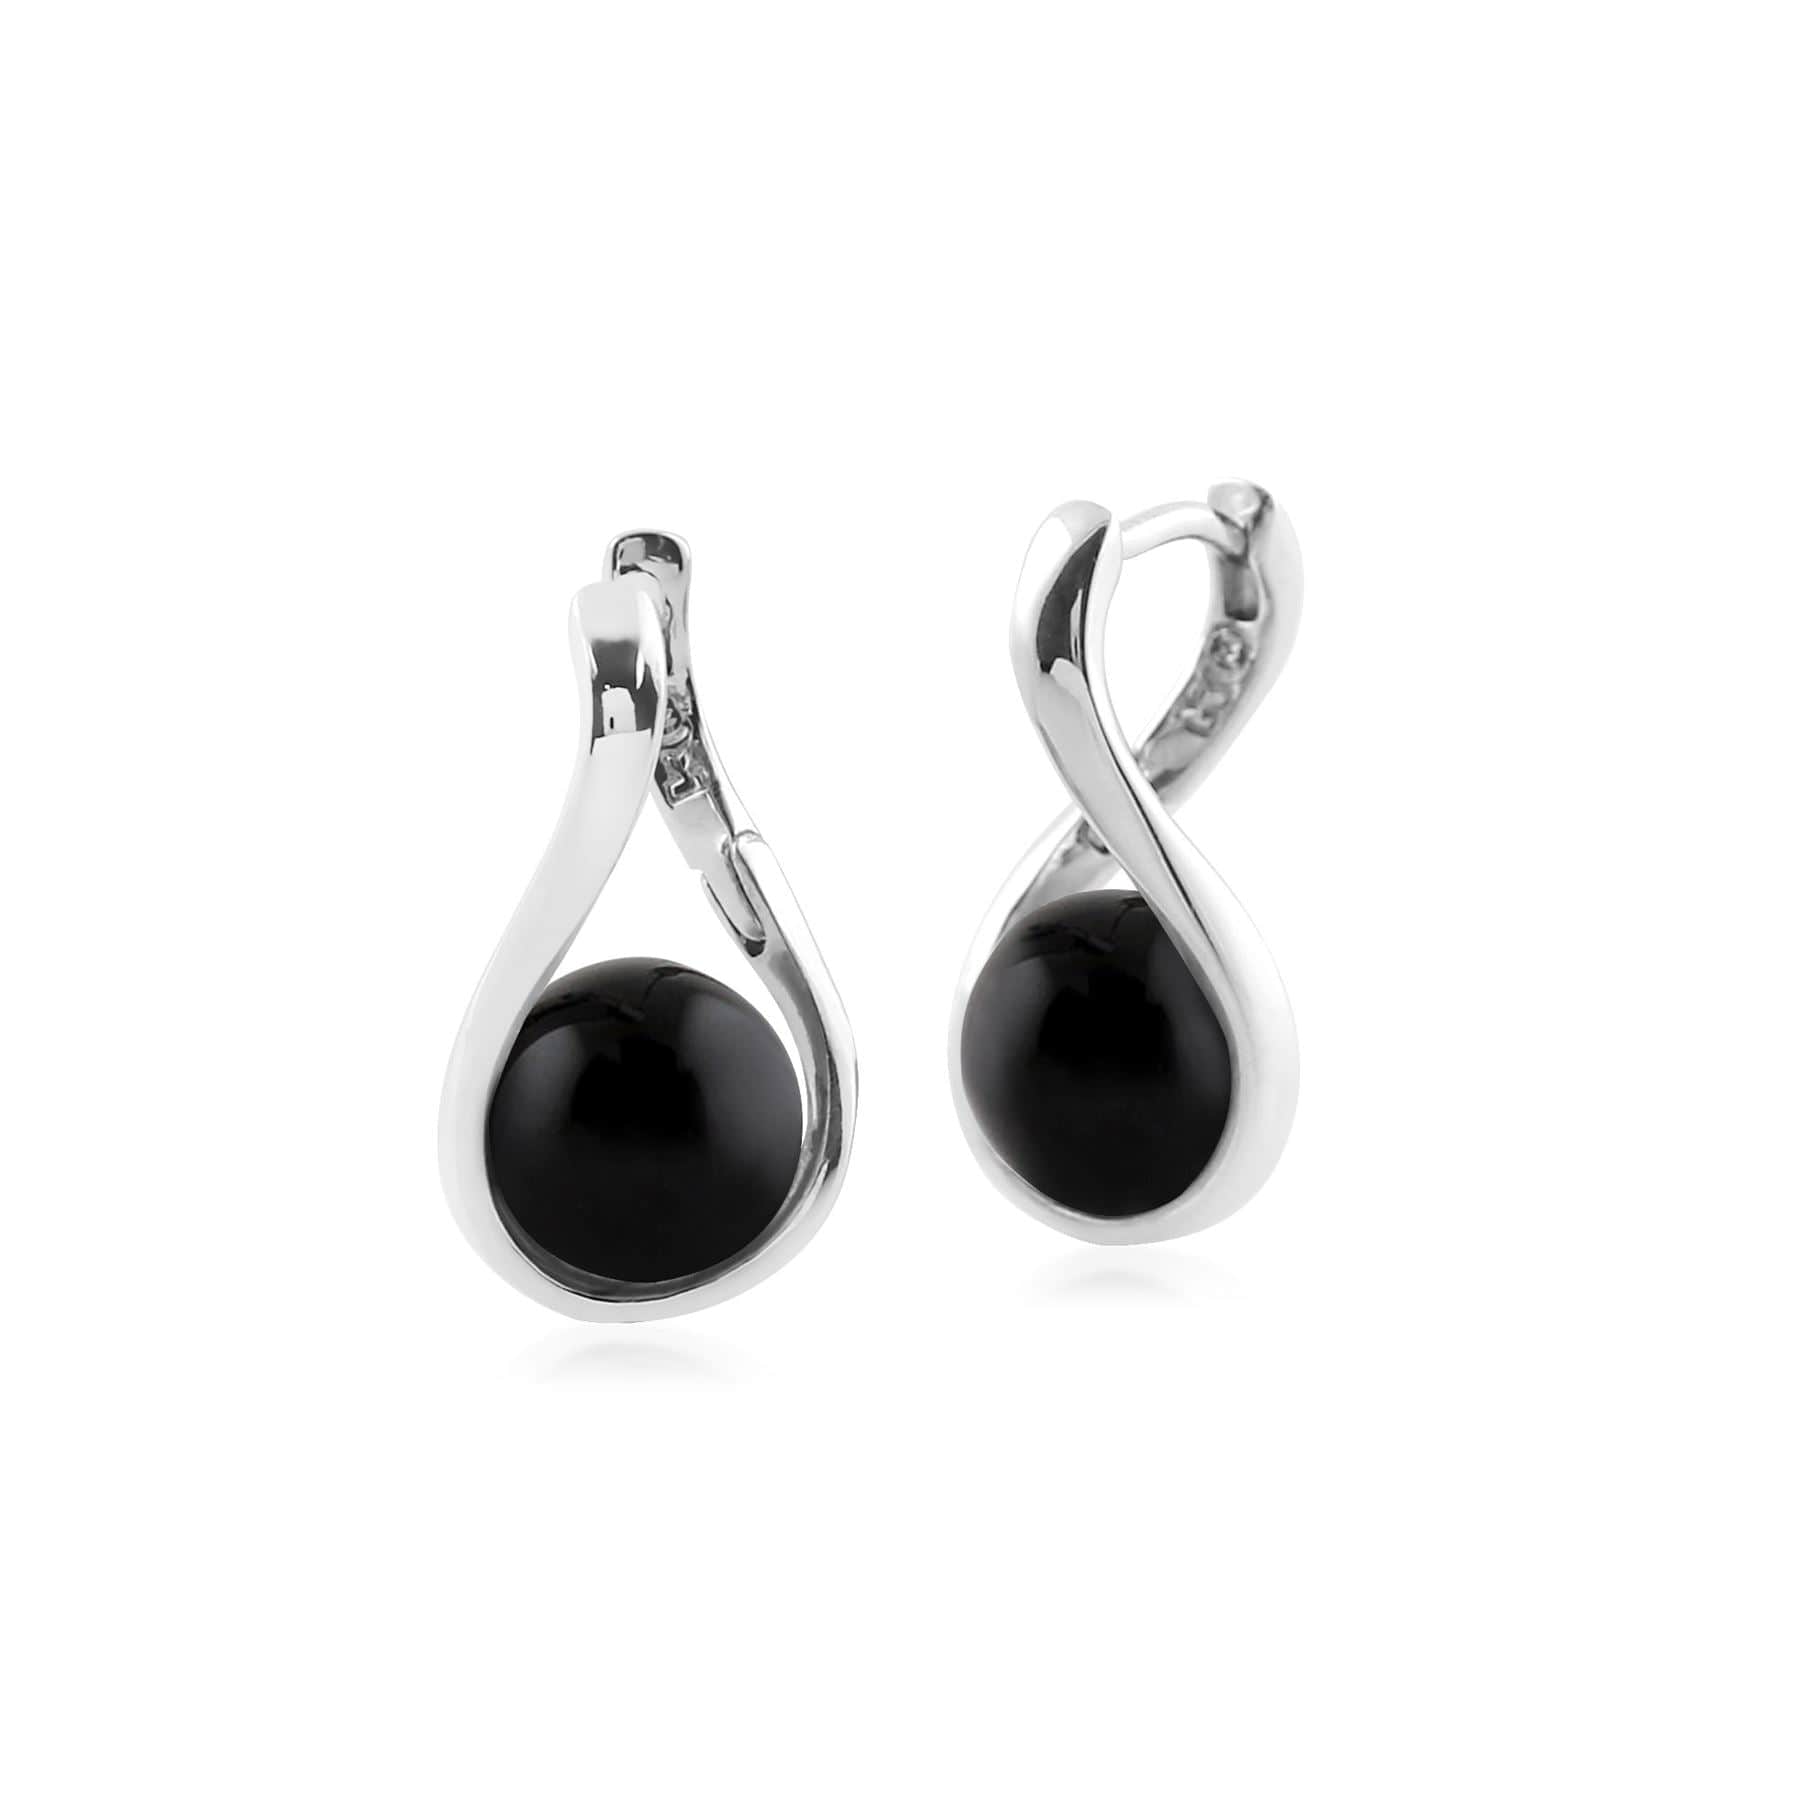 Kosmos Round Ball Shaped Black Onyx Earrings in Rhodium Plated Sterling Silver - Gemondo